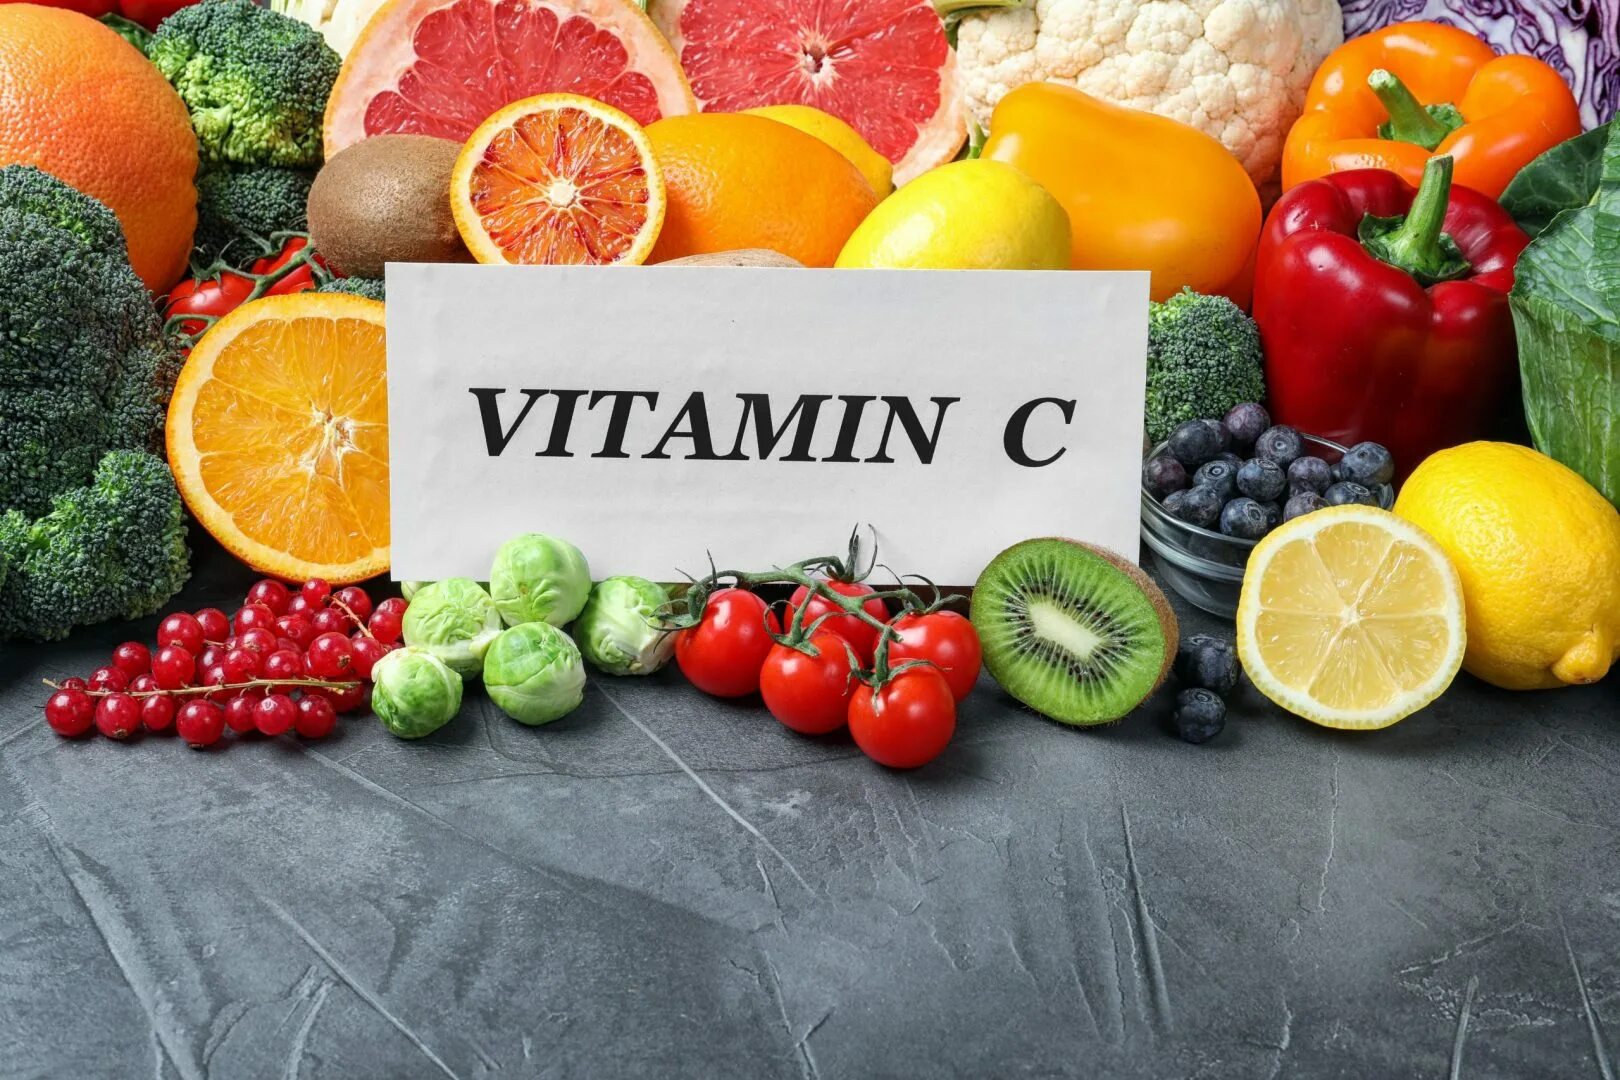 Much vitamins. Что такое витамины. Витамин c. Витамины картинки. Факты о витаминах.